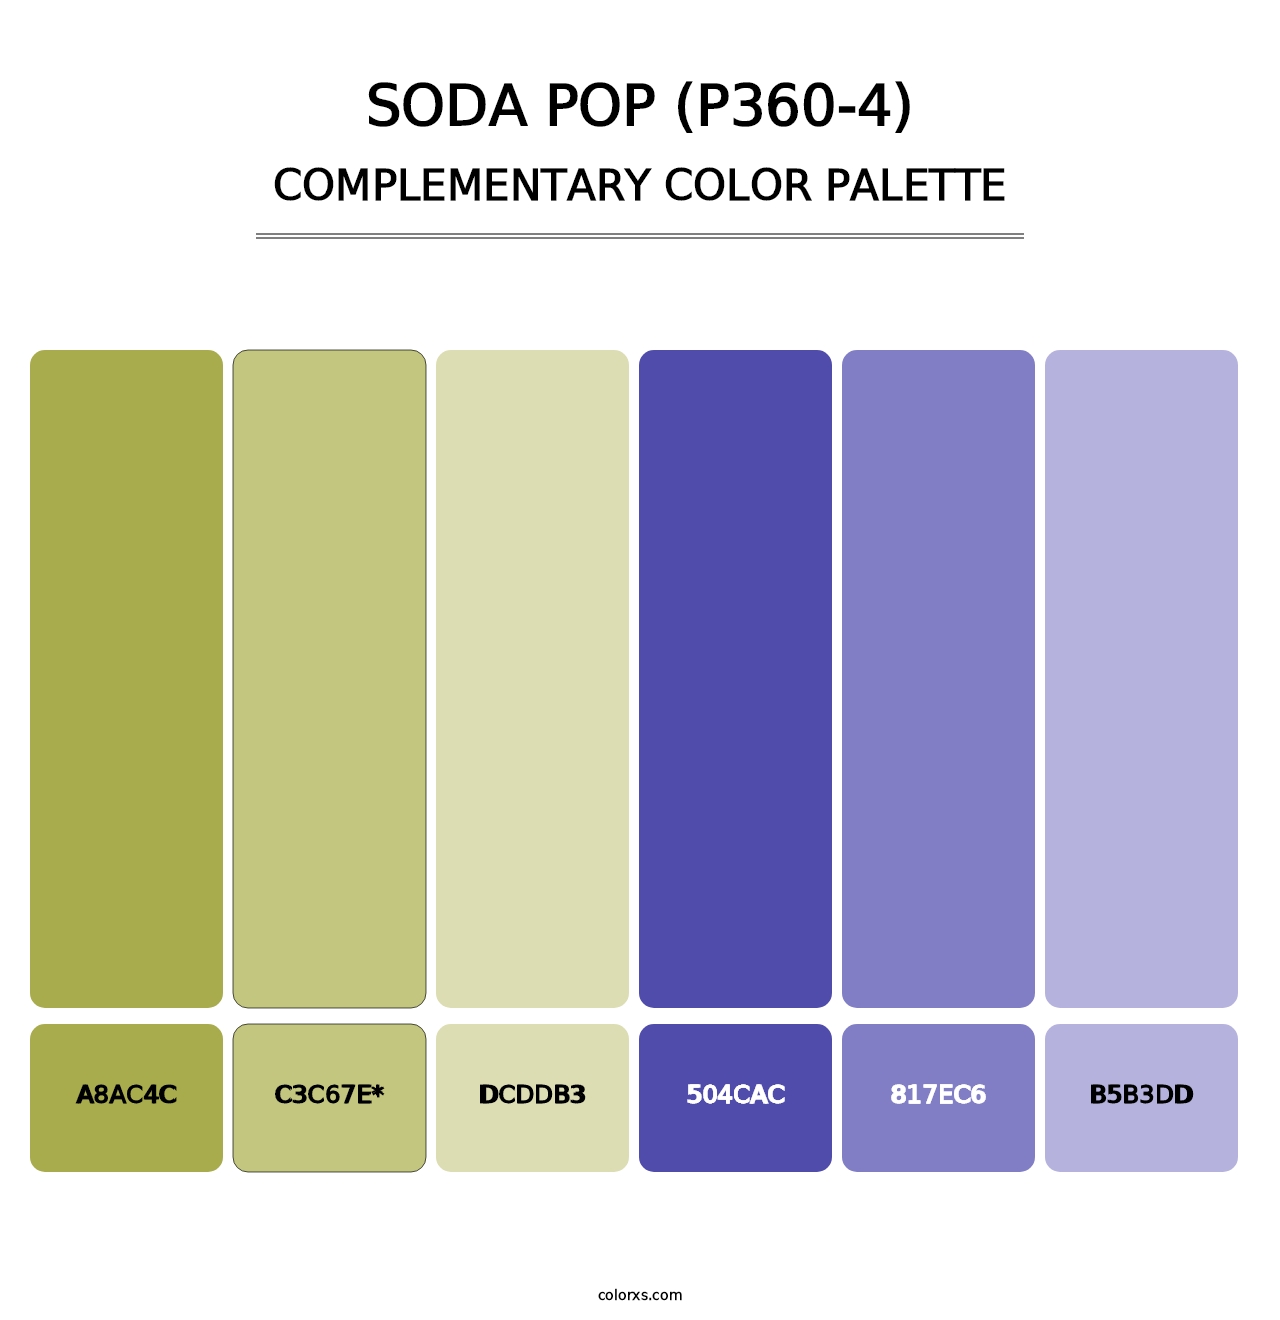 Soda Pop (P360-4) - Complementary Color Palette